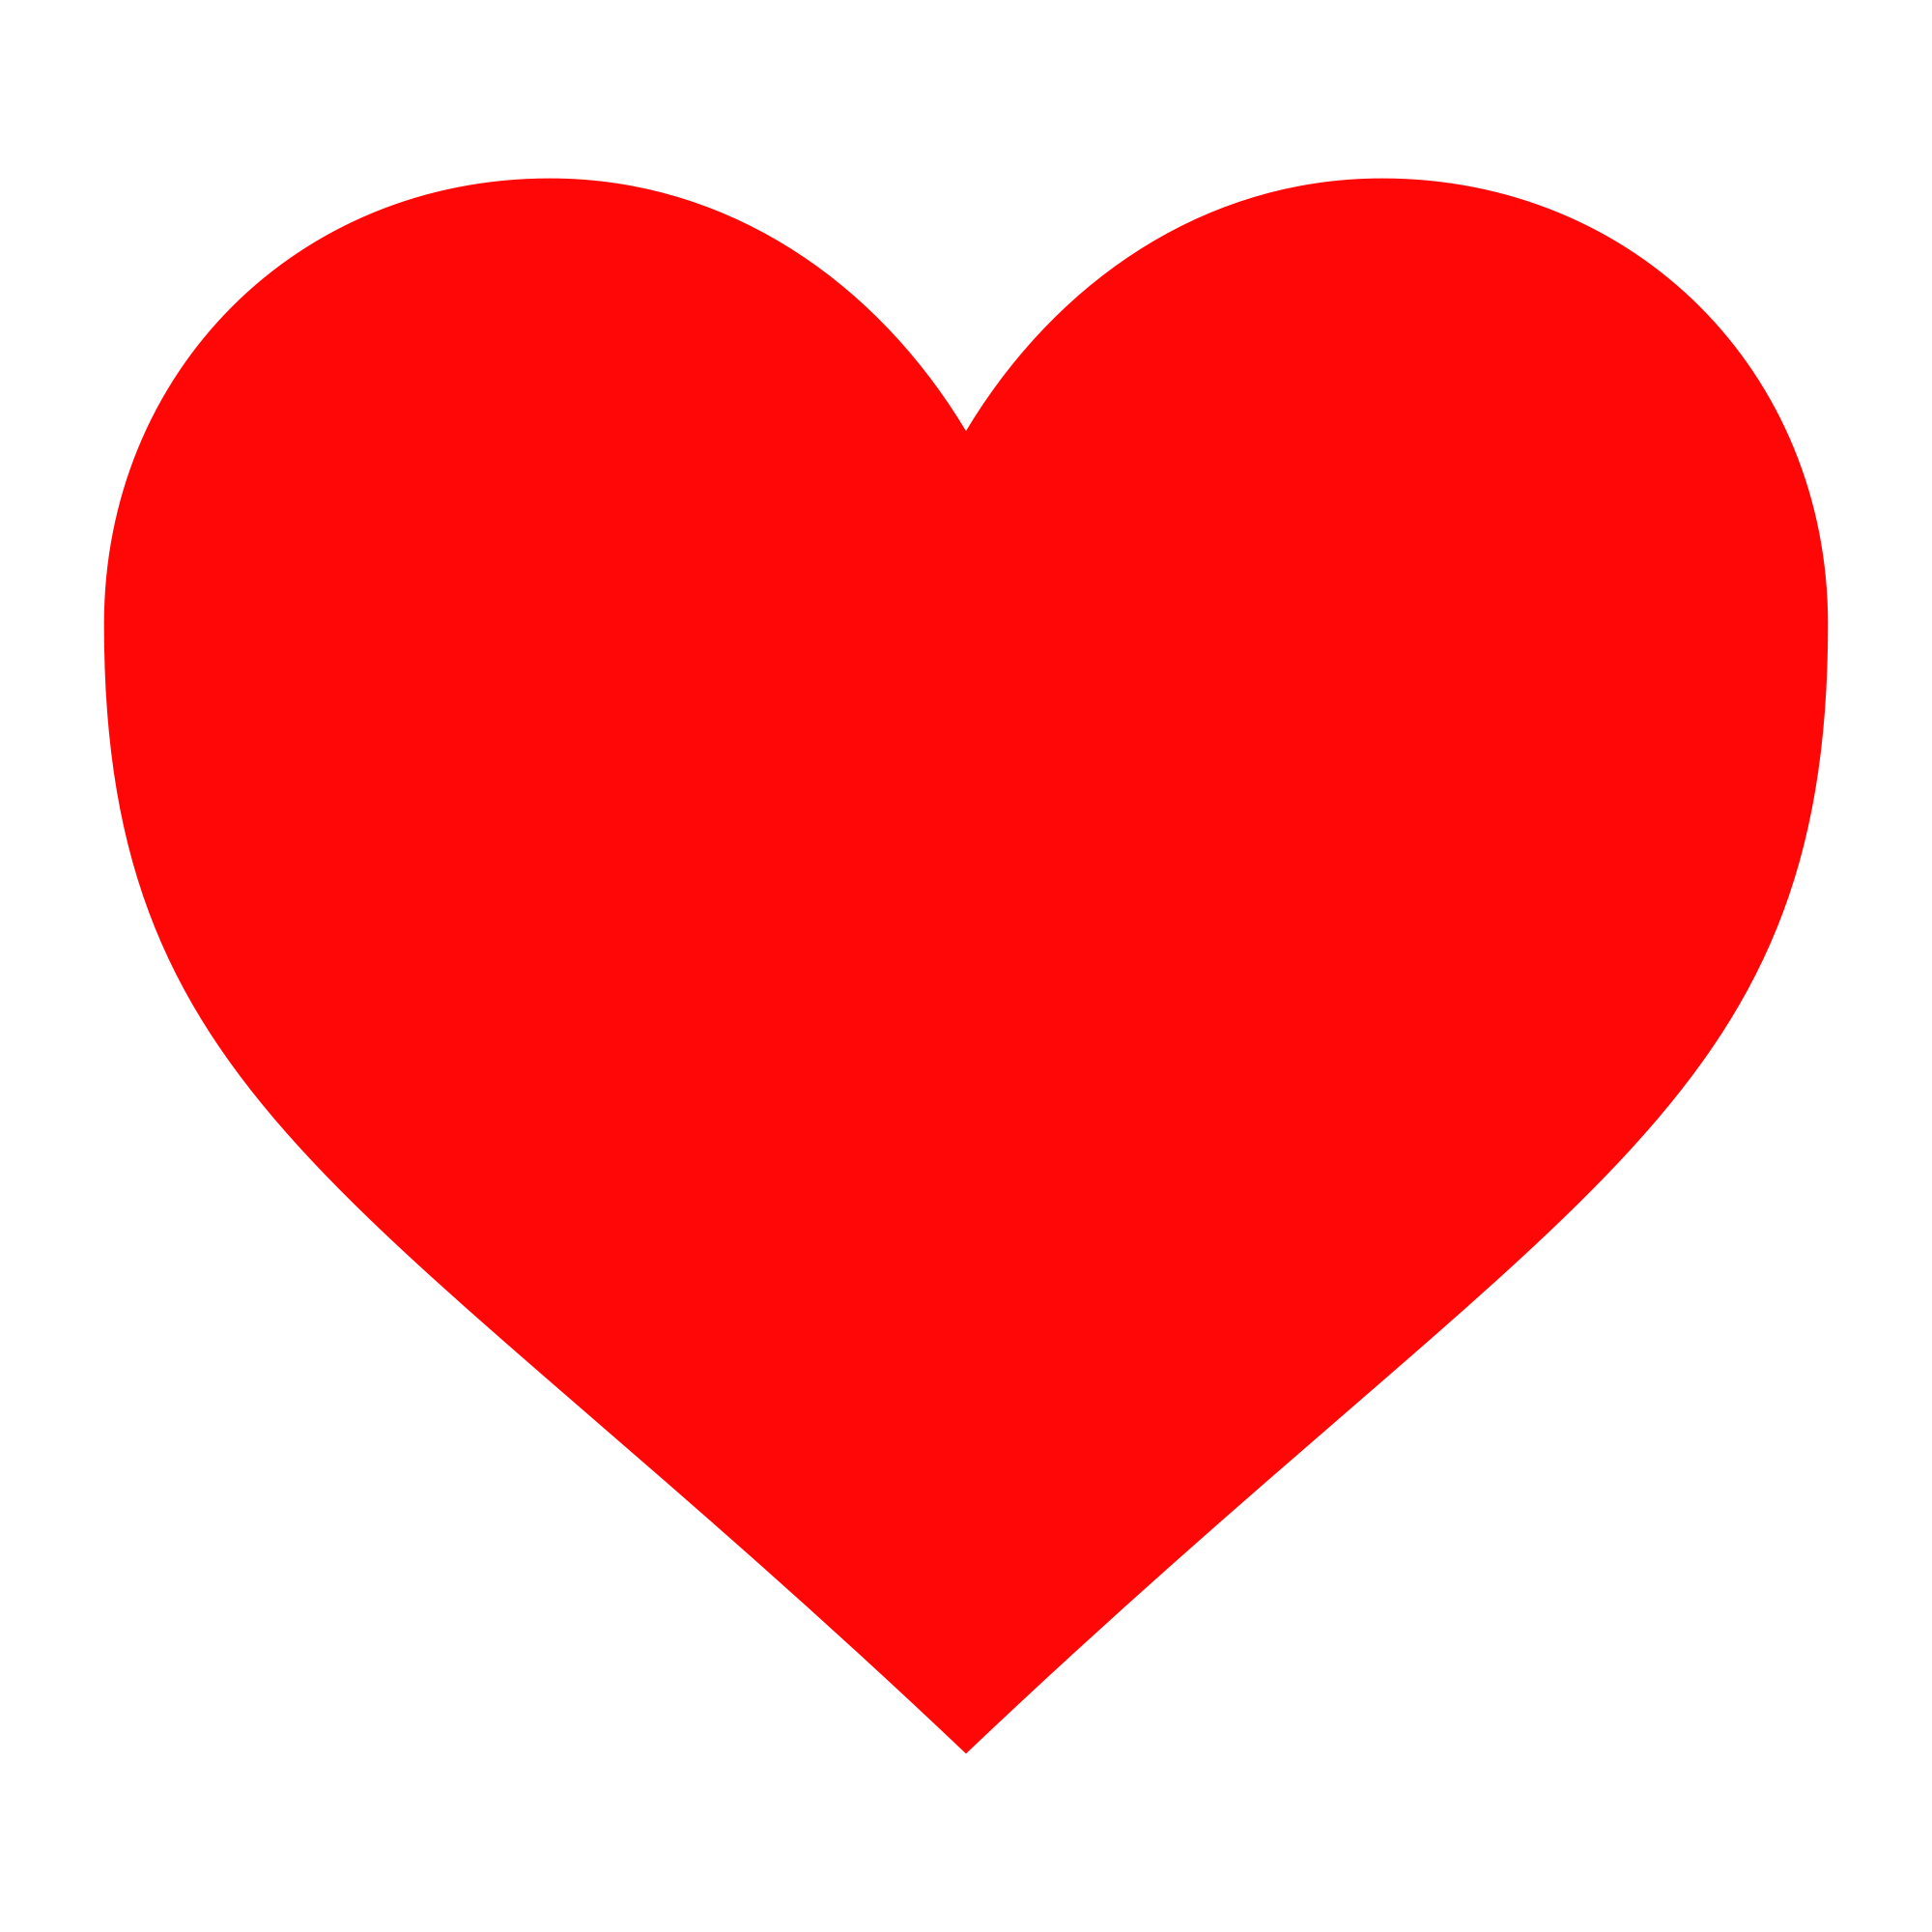 Dndm shape of my heart. Сердечко. Красное сердечко. Символ сердца. Красное сердце на белом фоне.